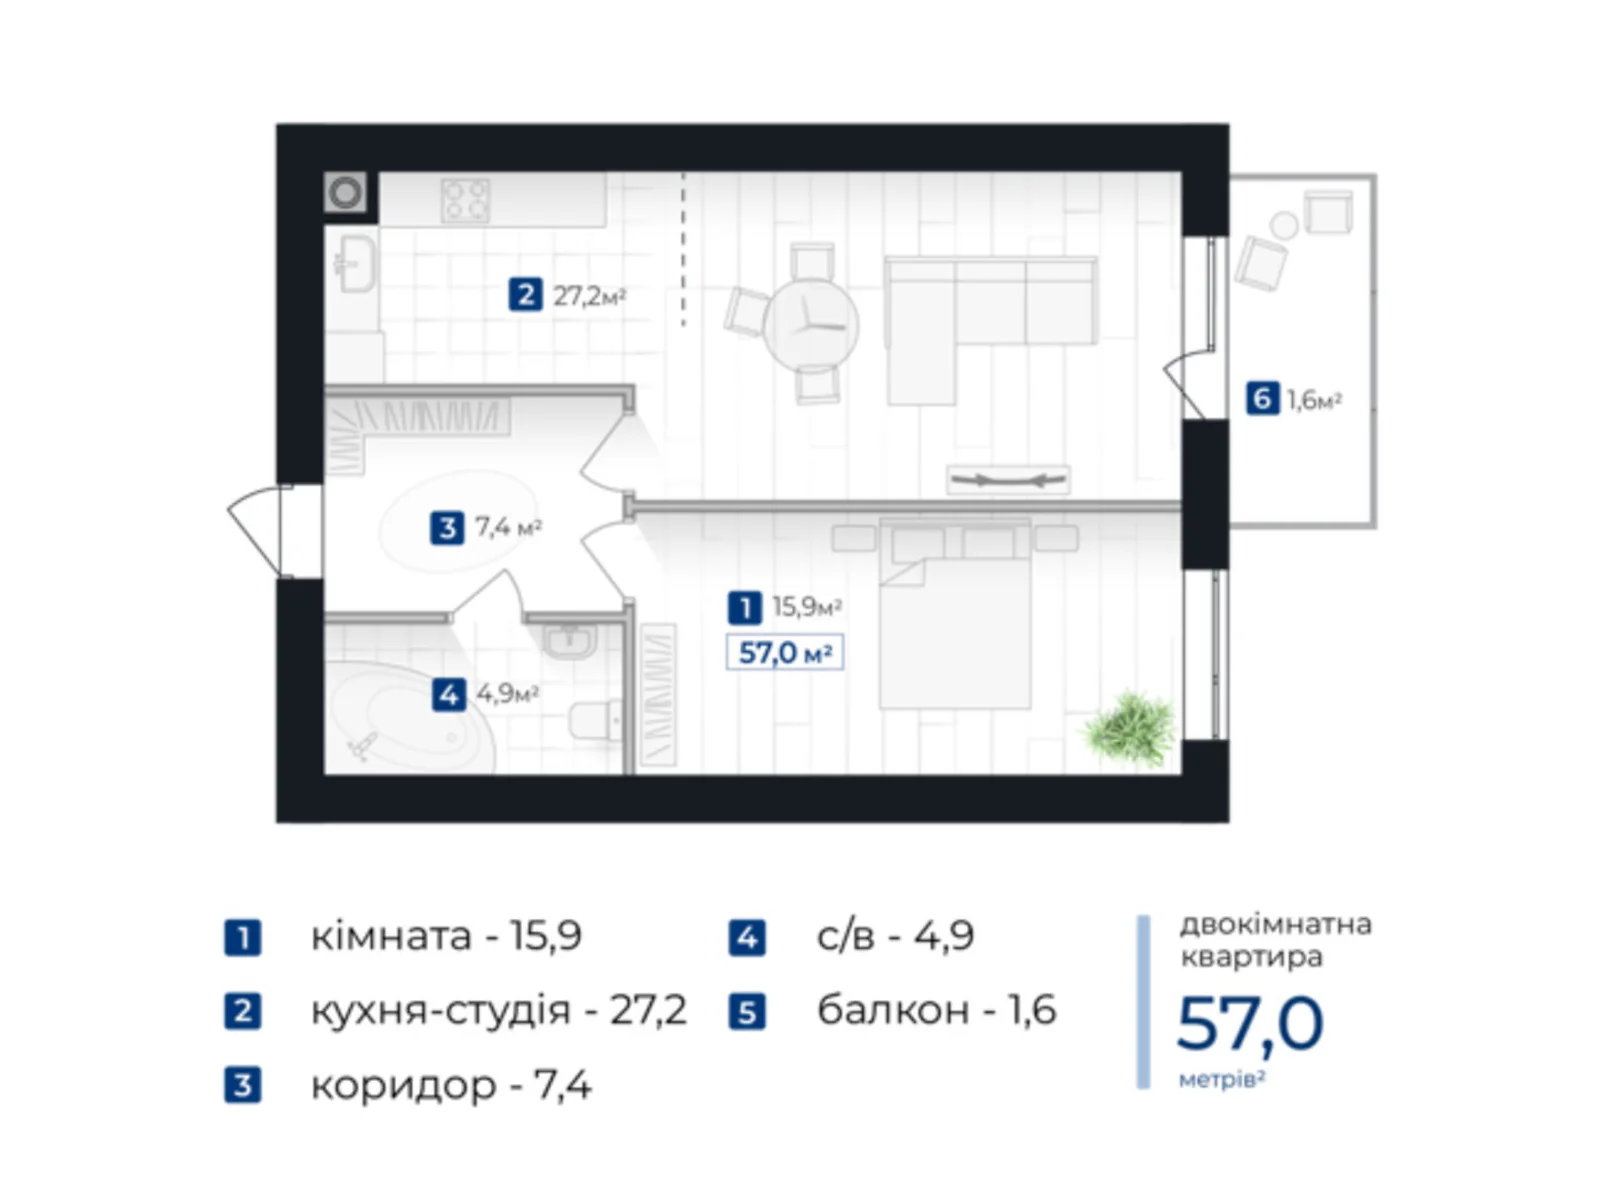 Продается 2-комнатная квартира 57 кв. м в Ивано-Франковске, цена: 48450 $